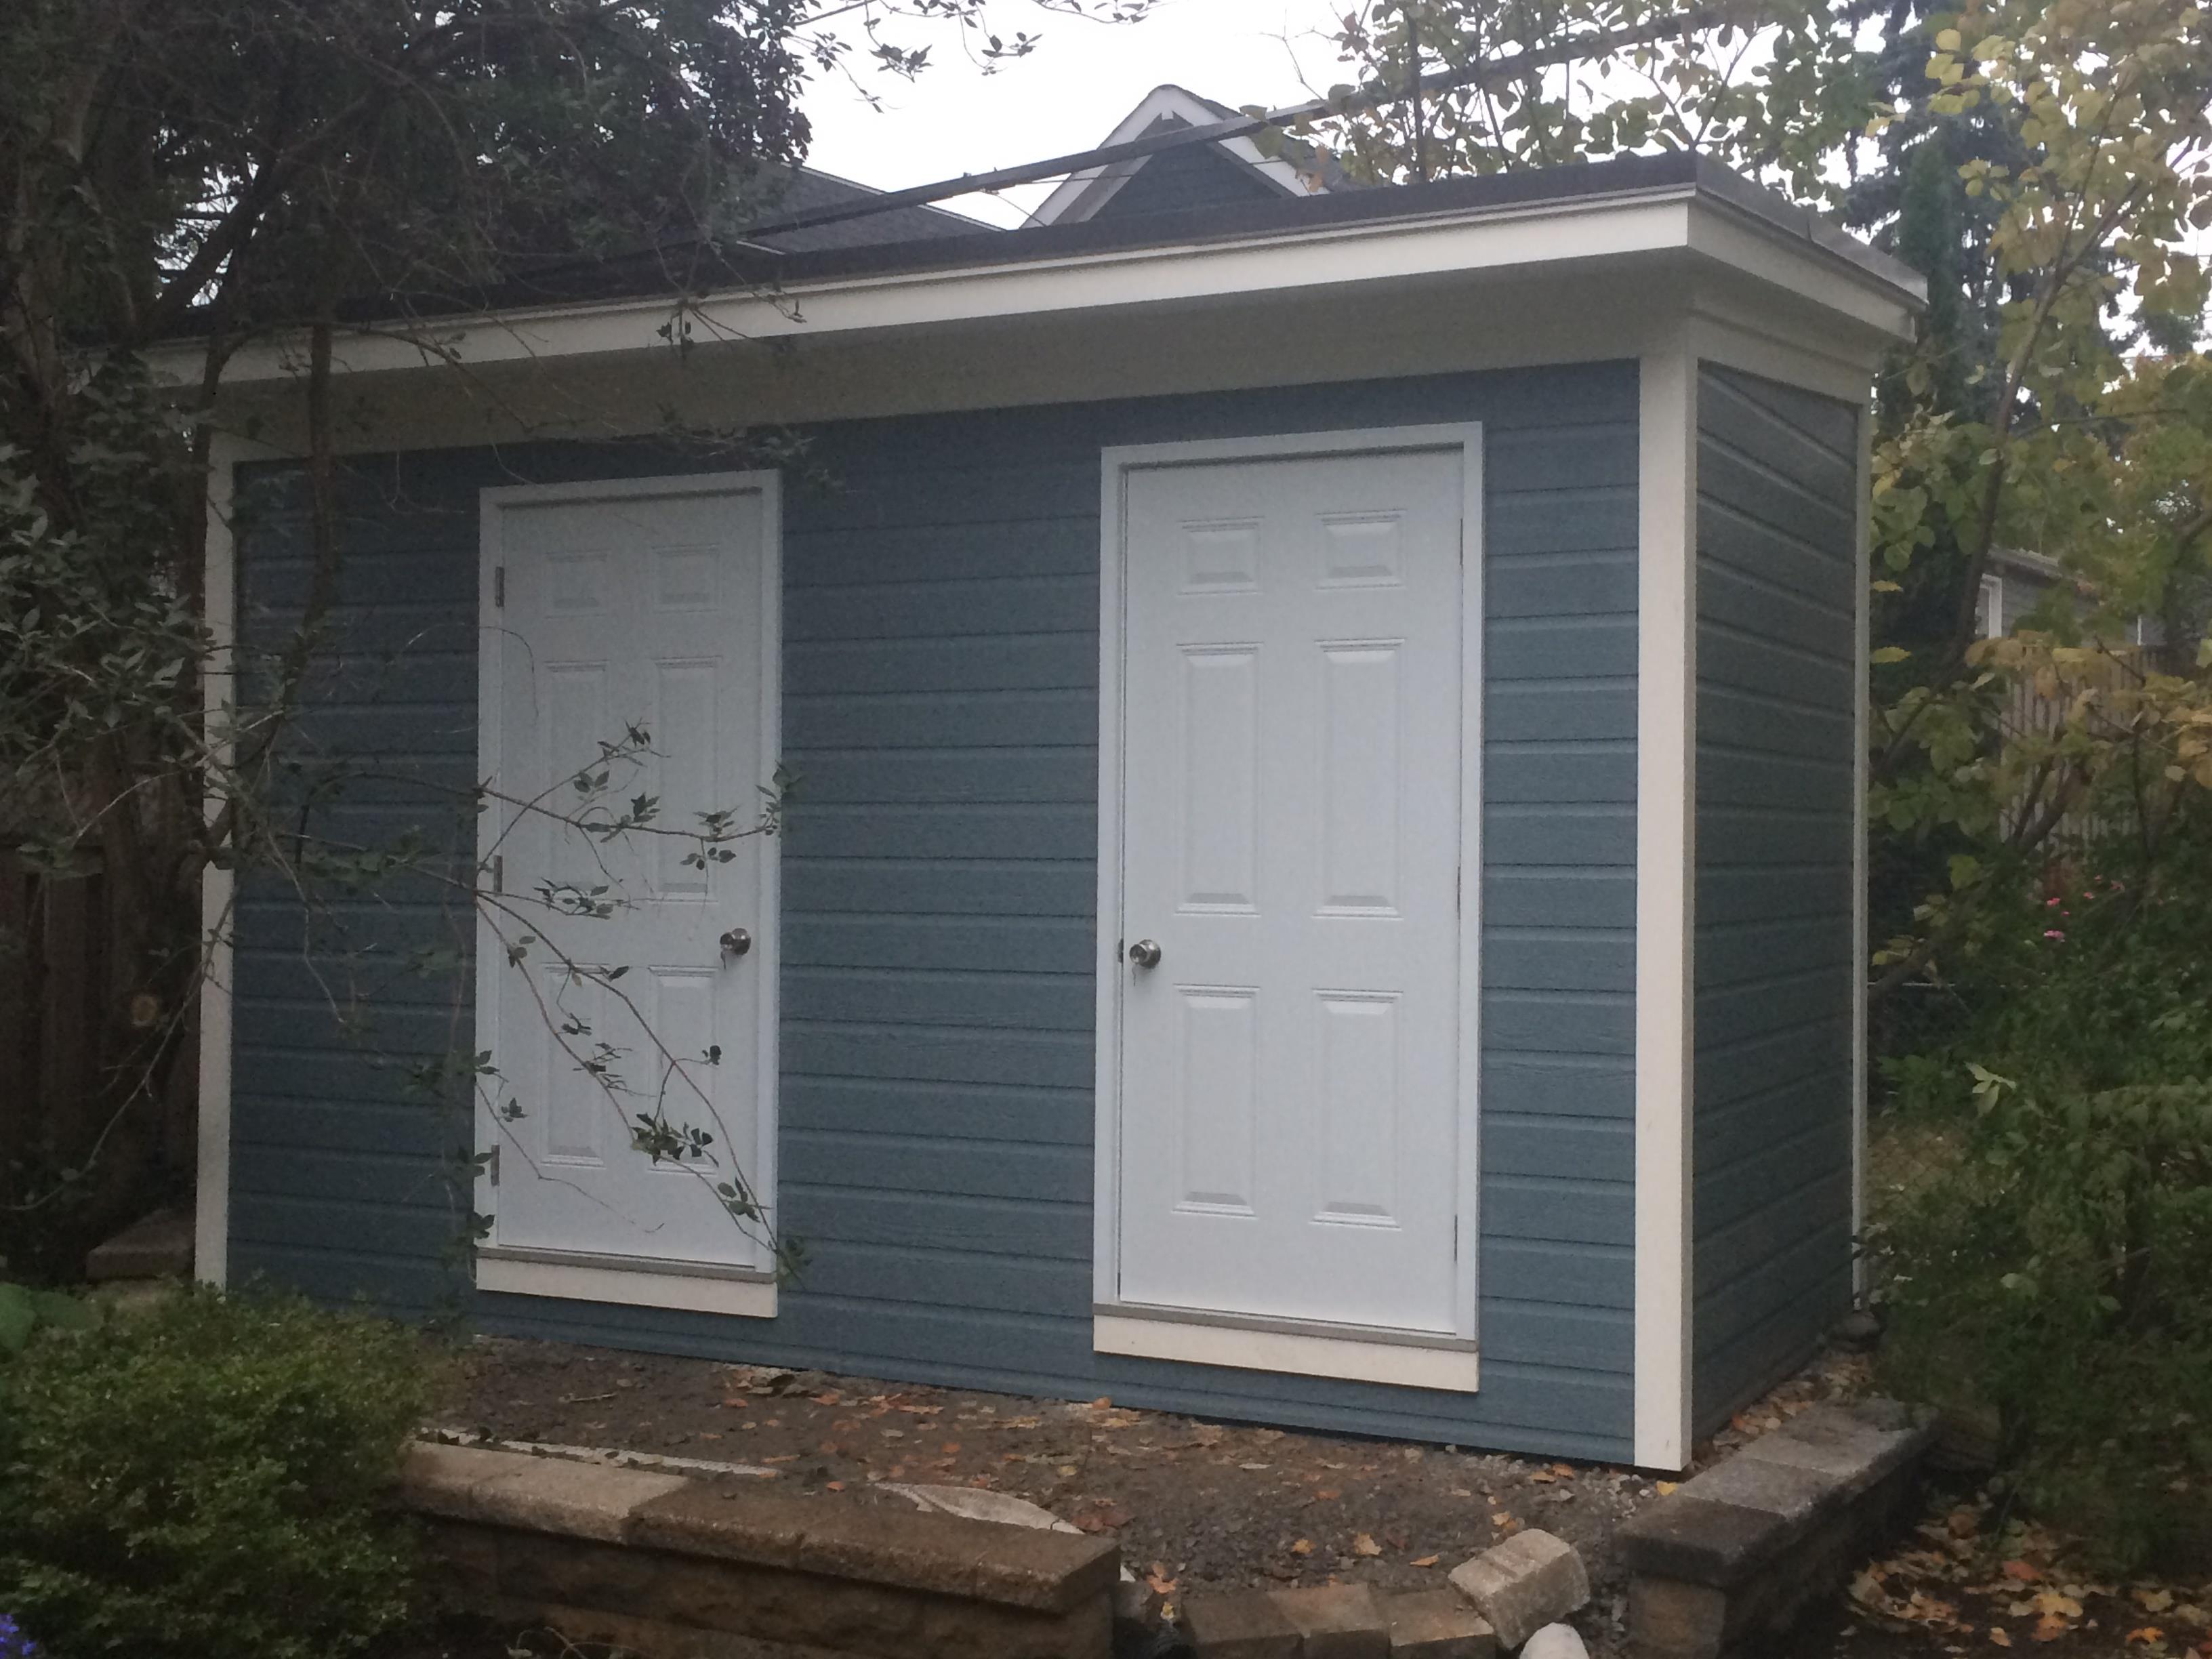 Blue Canexel Urban Studio shed 7x14 with metal vinyl doors in Toronto, Ontario. ID number 182089